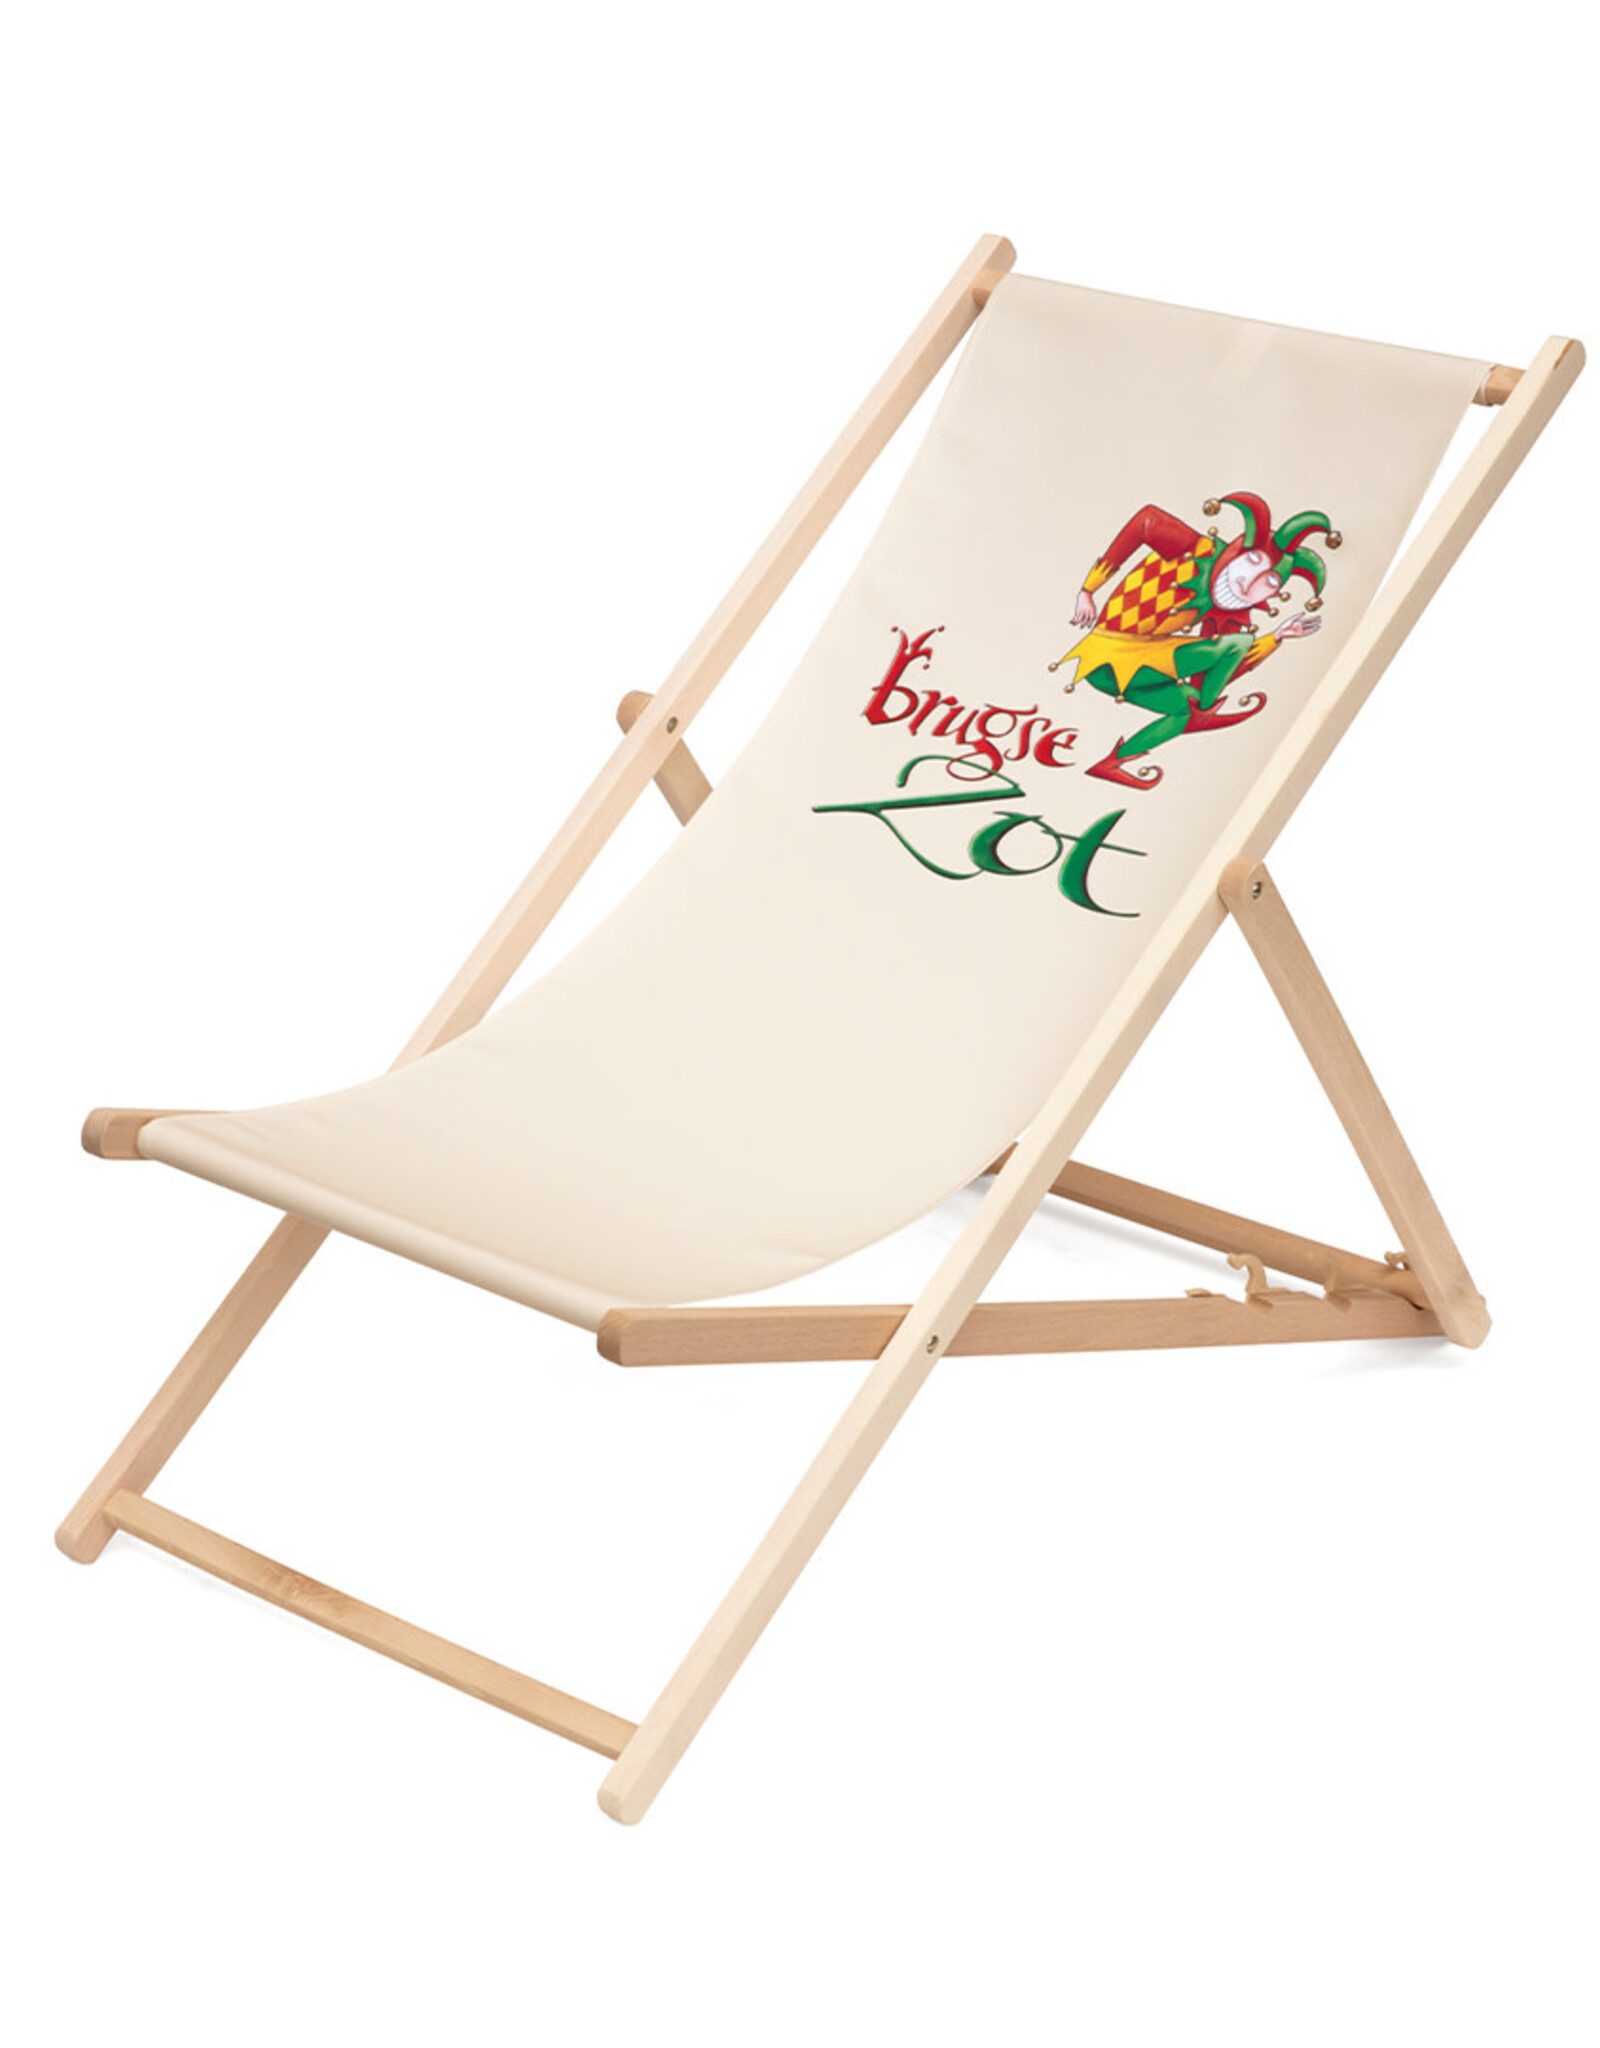 Brugse Zot Brugse Zot beach chair